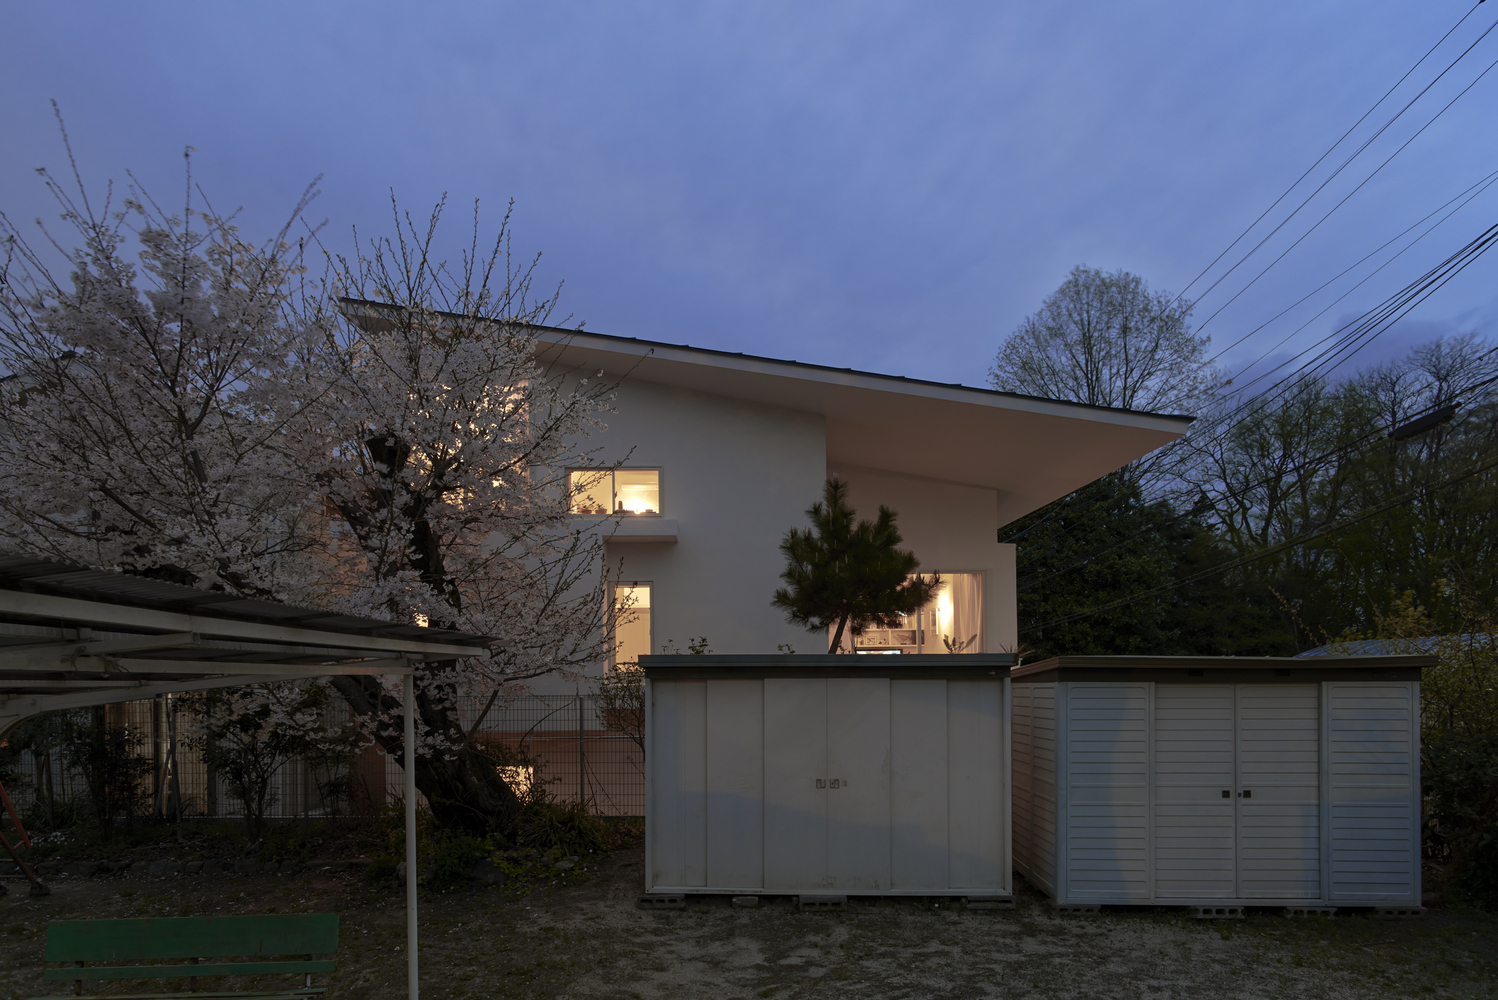 The Corner House in Kitashirakawa by UME architects